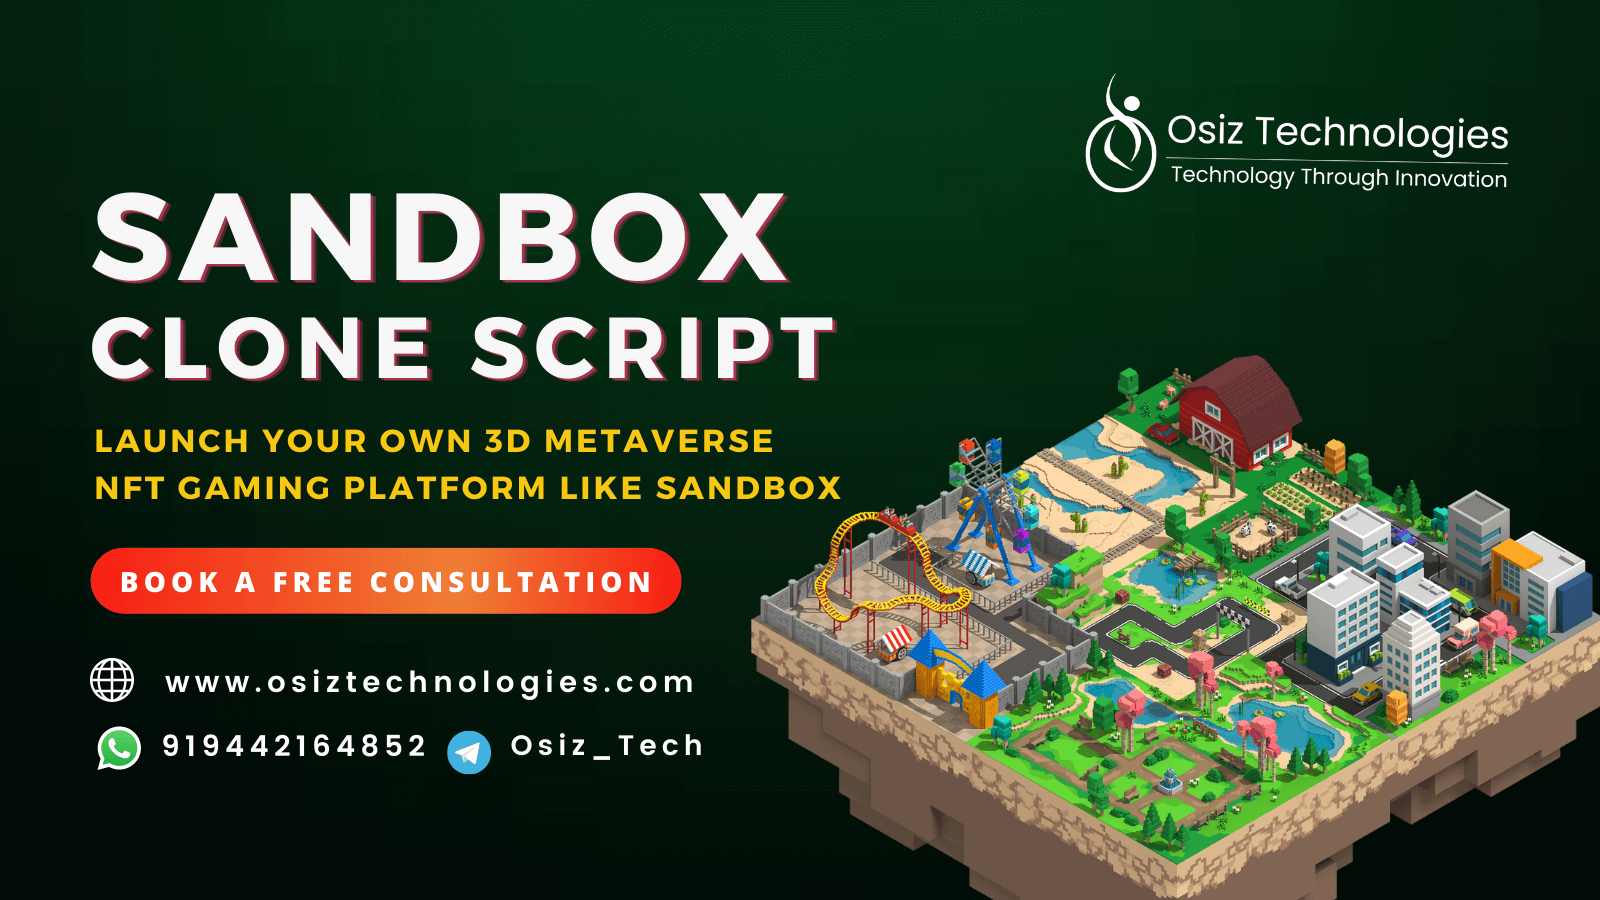 Sandbox Clone Script To Launch Your Own 3D Metaverse NFT Gaming Platform